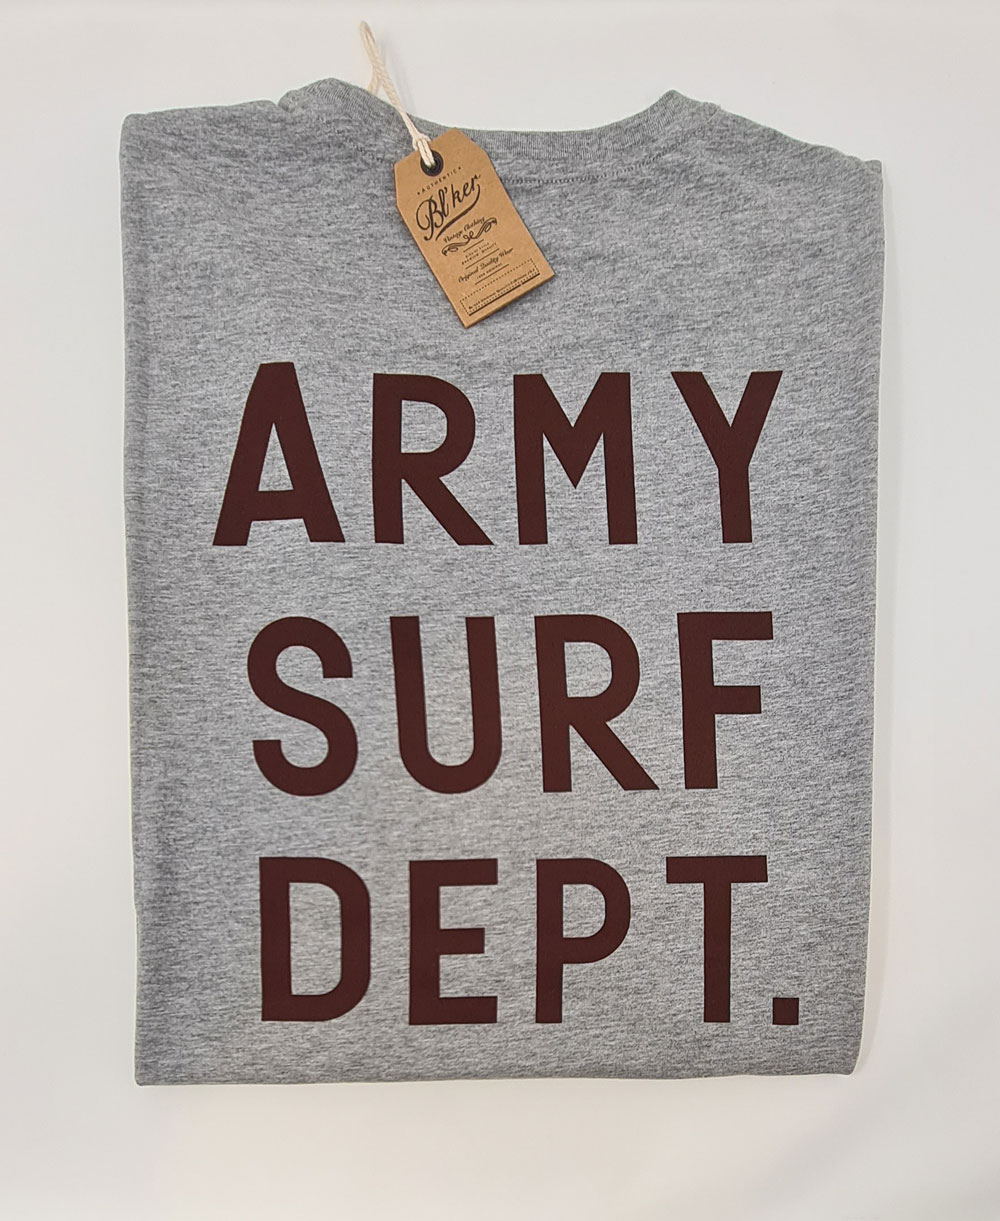 Army Surf Dept T-Shirt à Manches Courtes Homme Heather Grey